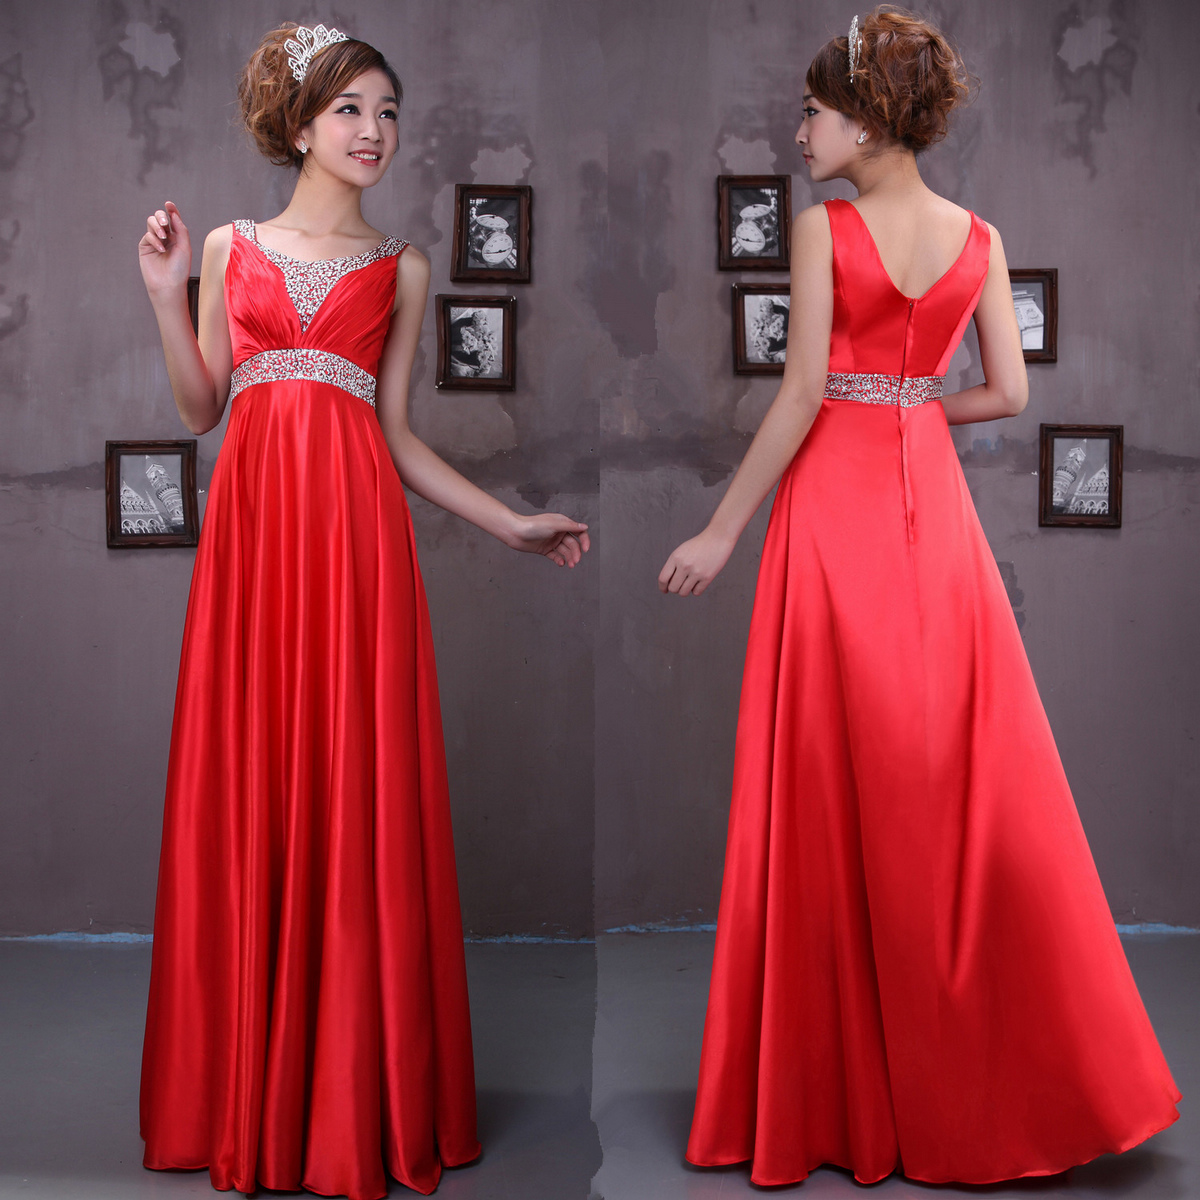 Yarn bridal red evening dress winter evening dress long formal dress clf-619